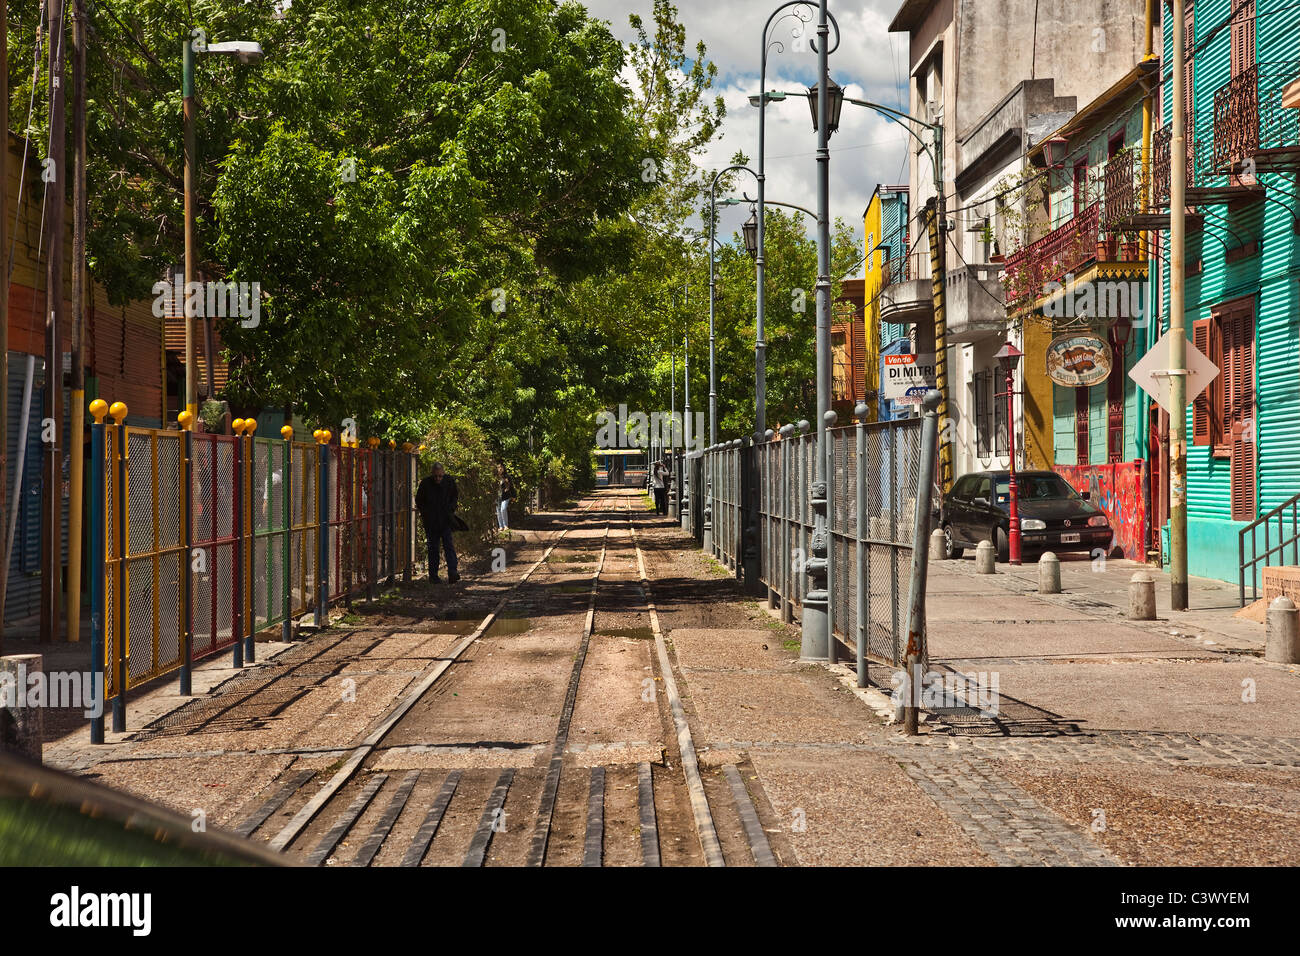 Rail / Tram lines, La Boca, Buenos Aires, Argentina, South America. Stock Photo